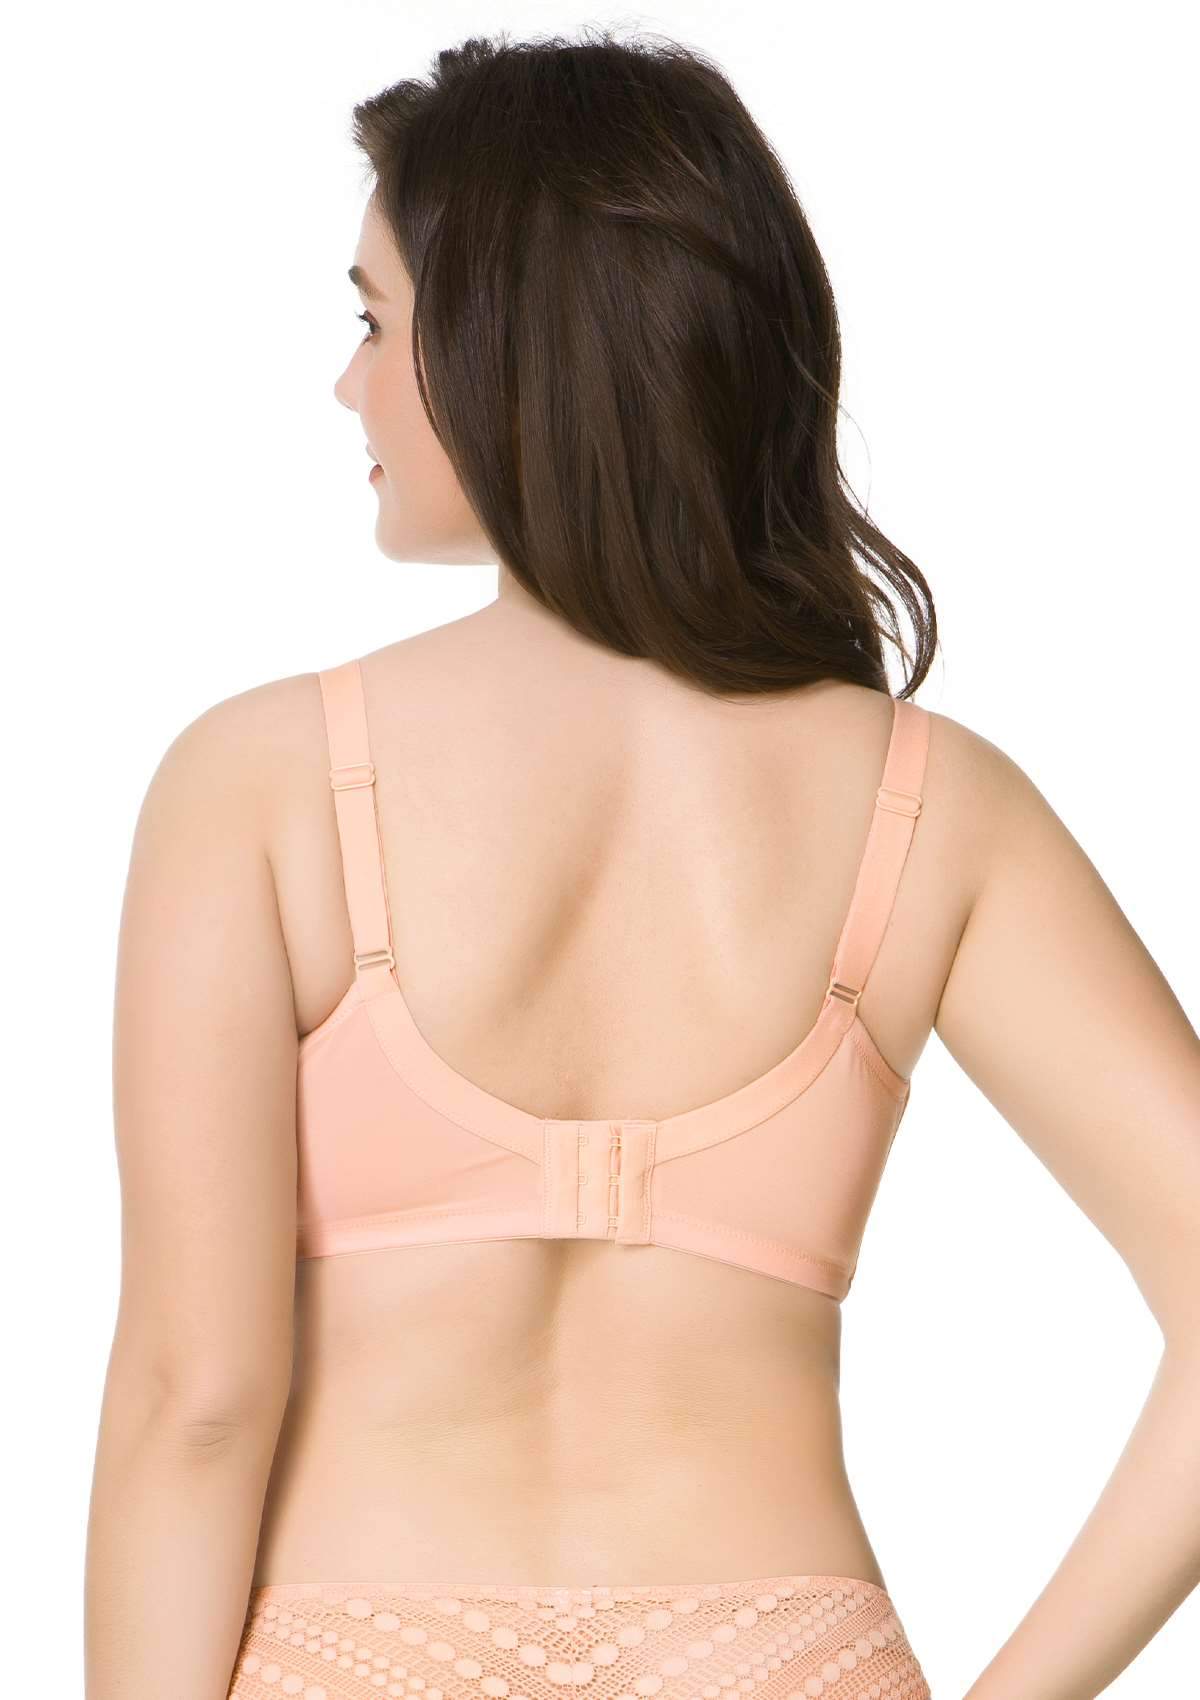 HSIA Heroine Lace Bra And Panty: Best Full Figure Minimizer Bra - Rose Cloud / 42 / C